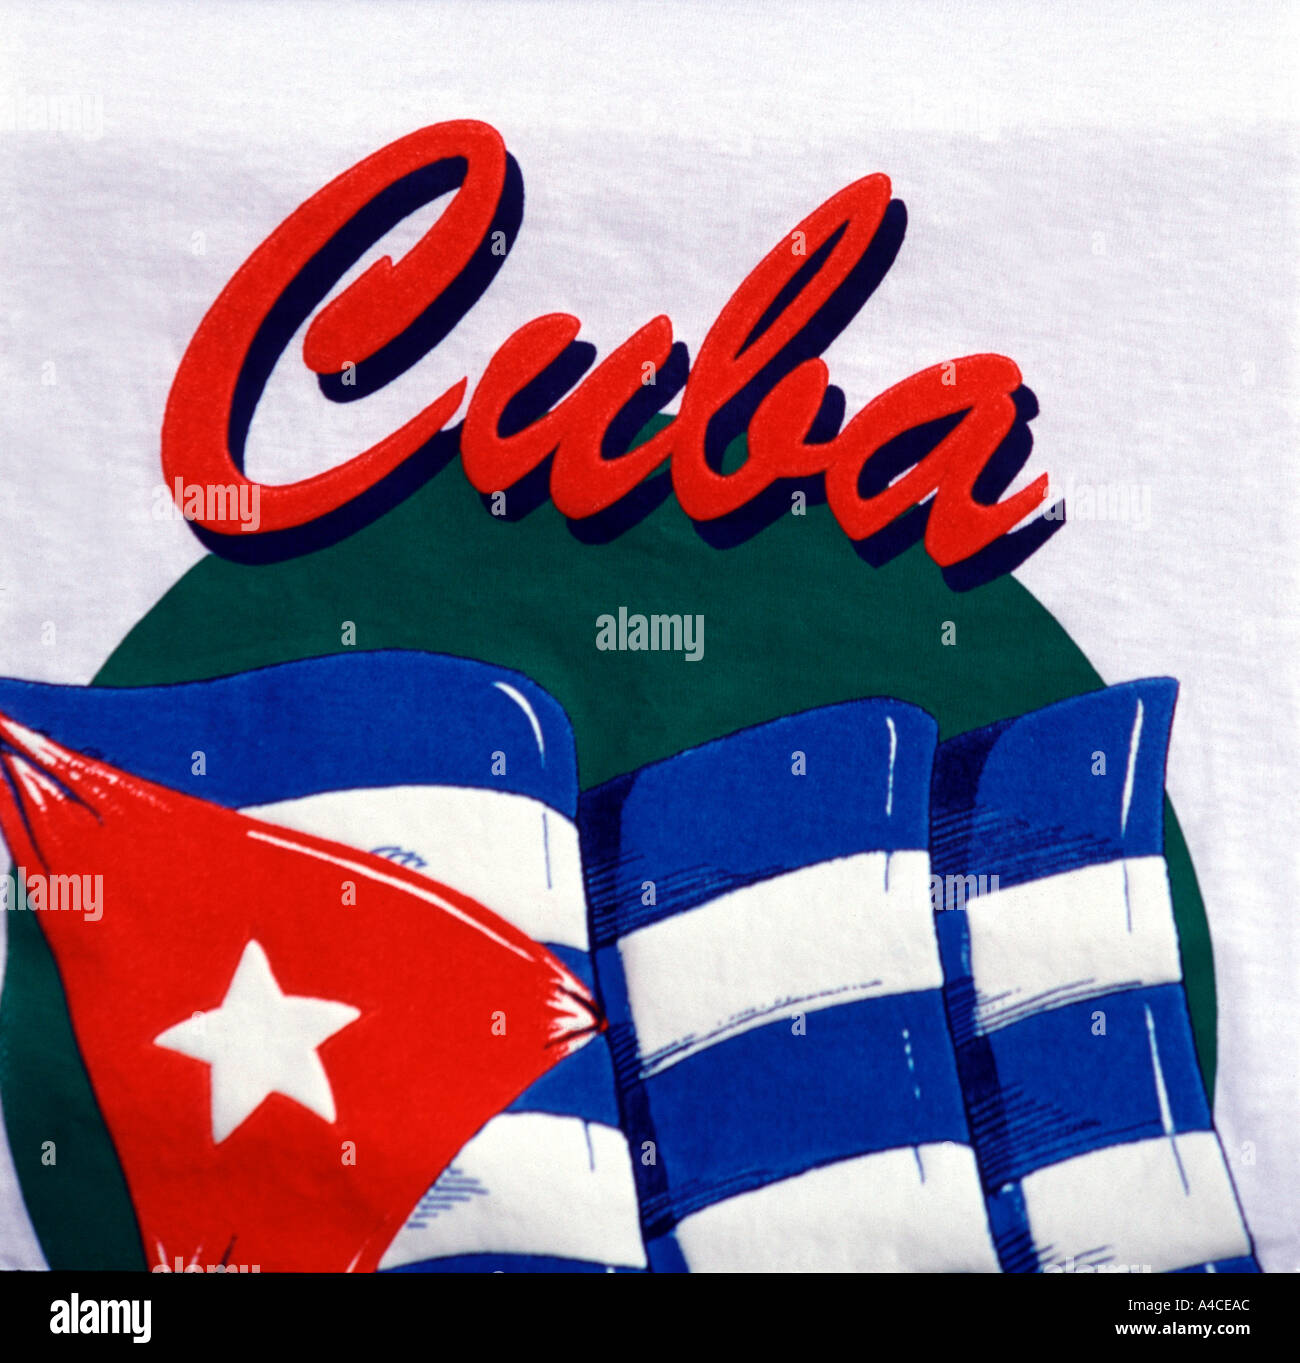 Bandera cubana motif impreso en la camiseta Foto de stock